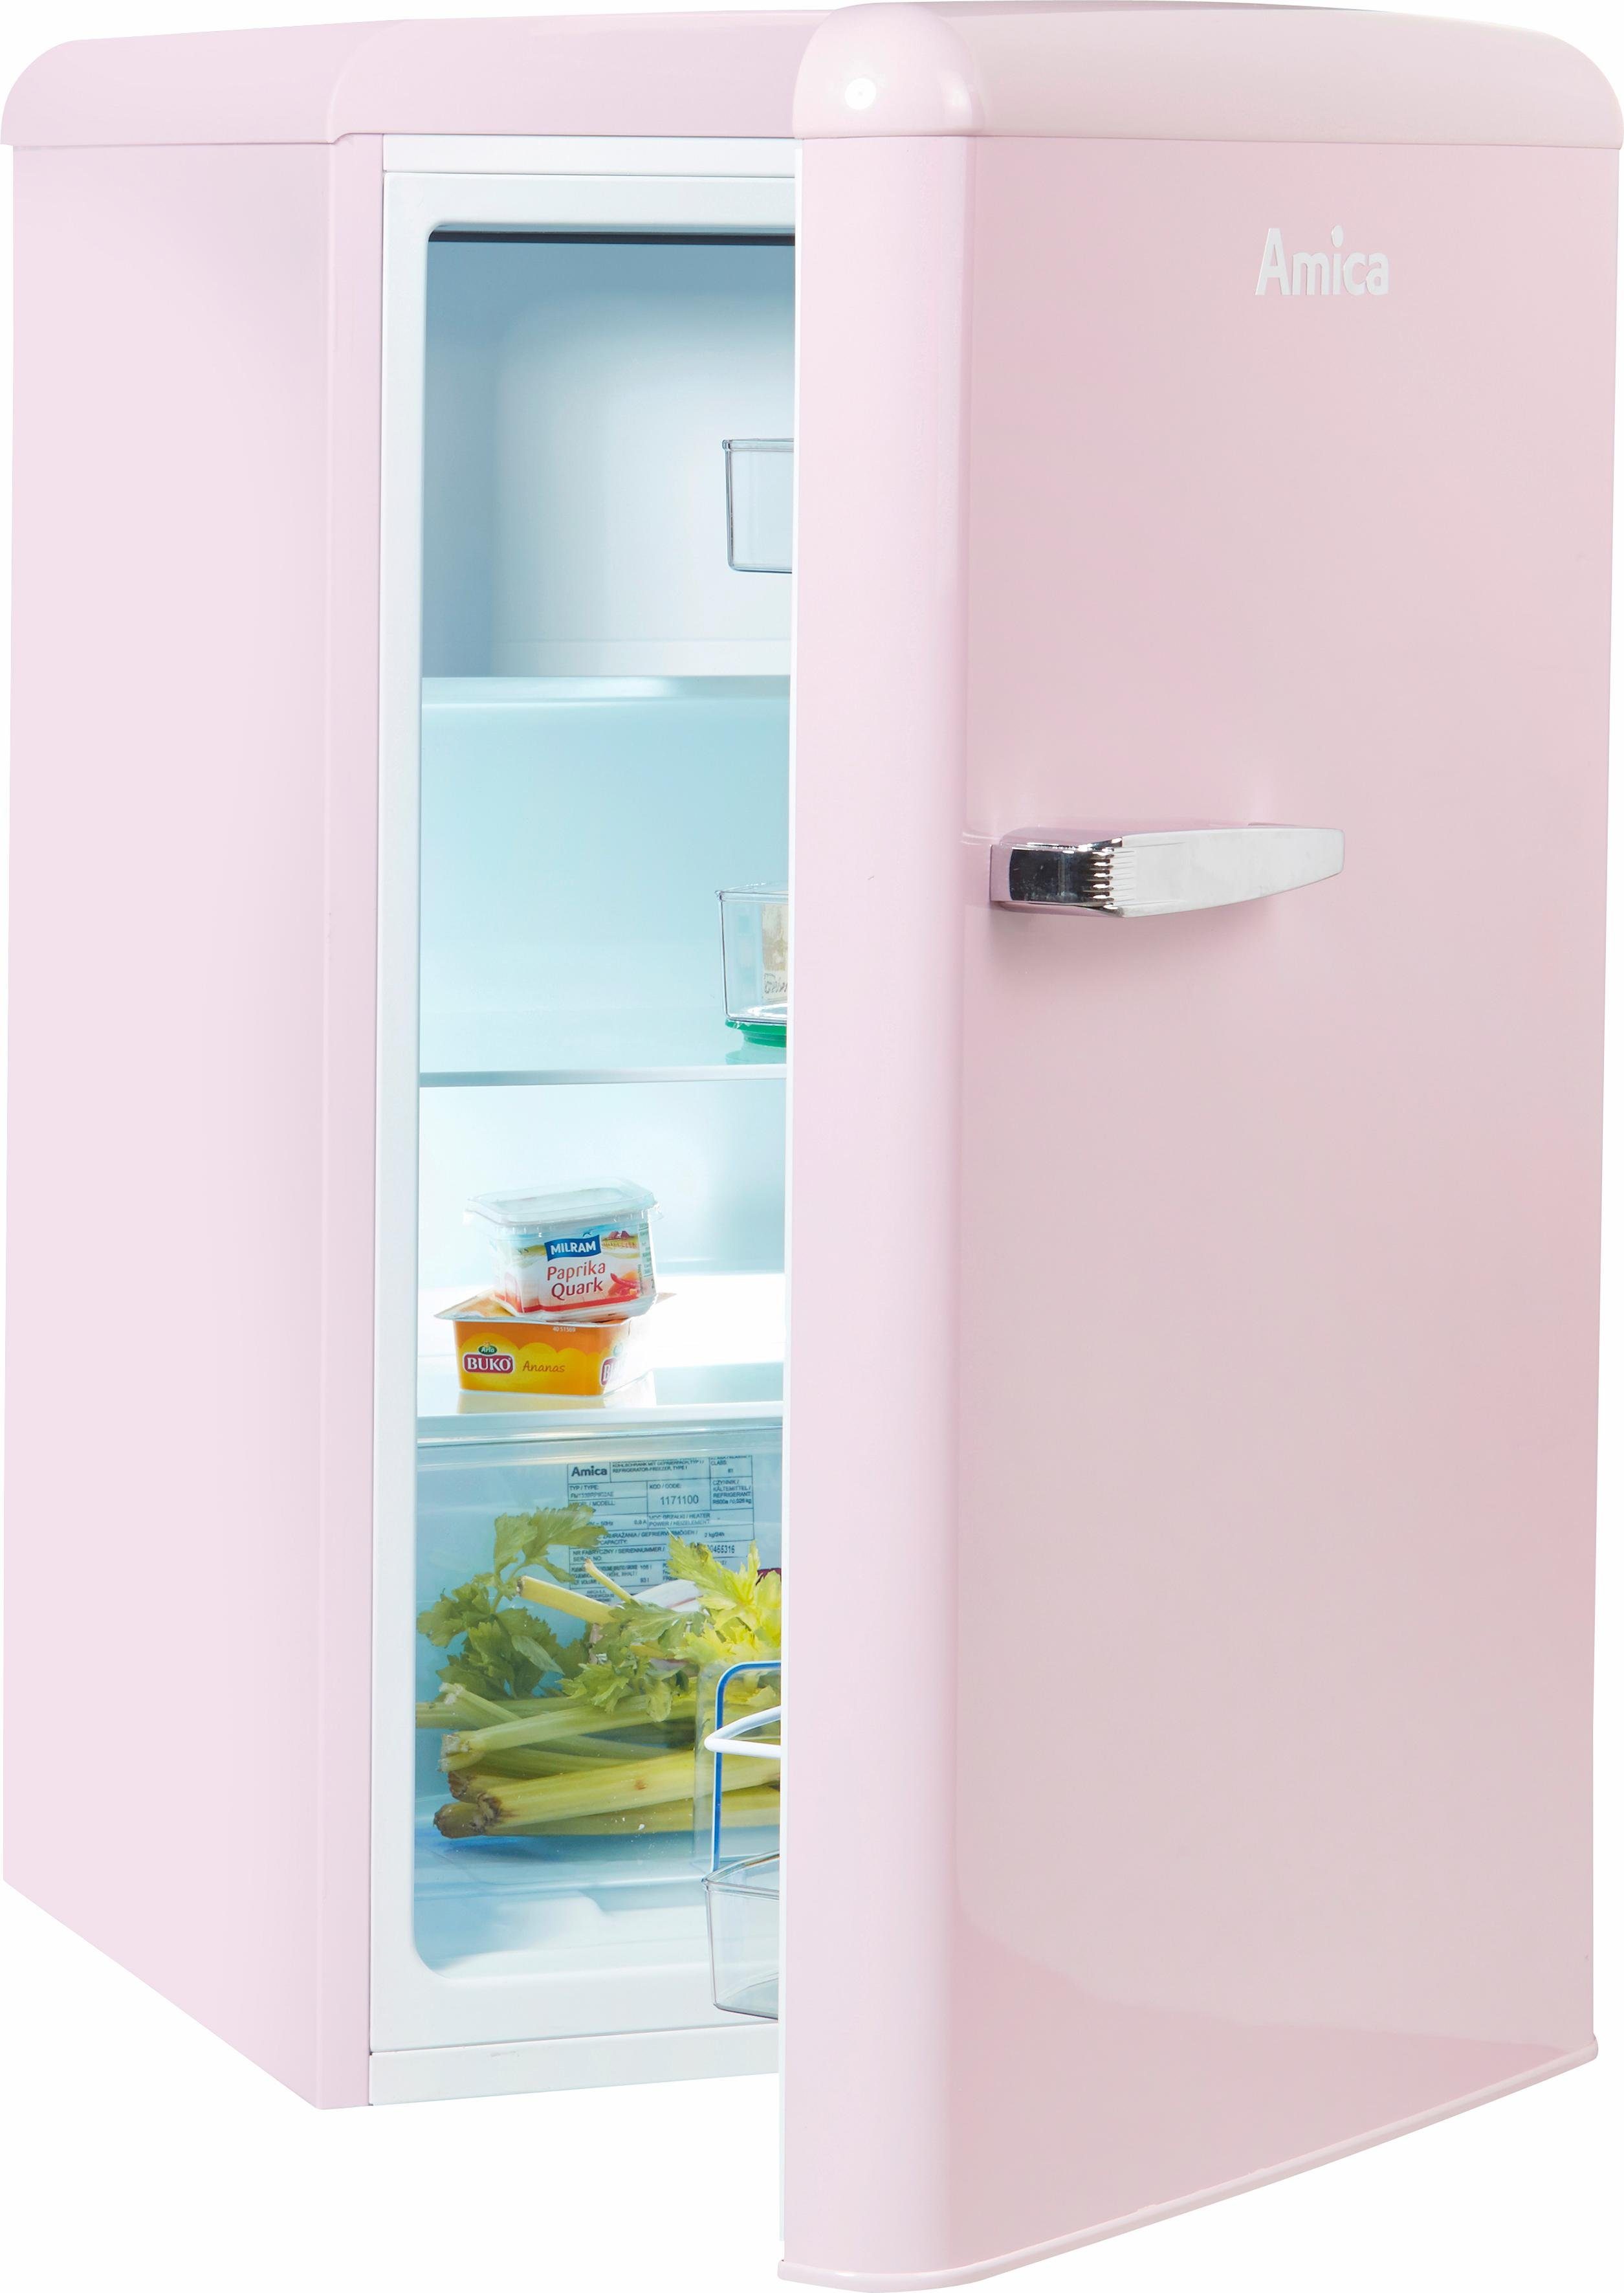 Amica Table Top Kühlschrank pink hoch, breit P, KS 15616 cm 55 cm 87,5